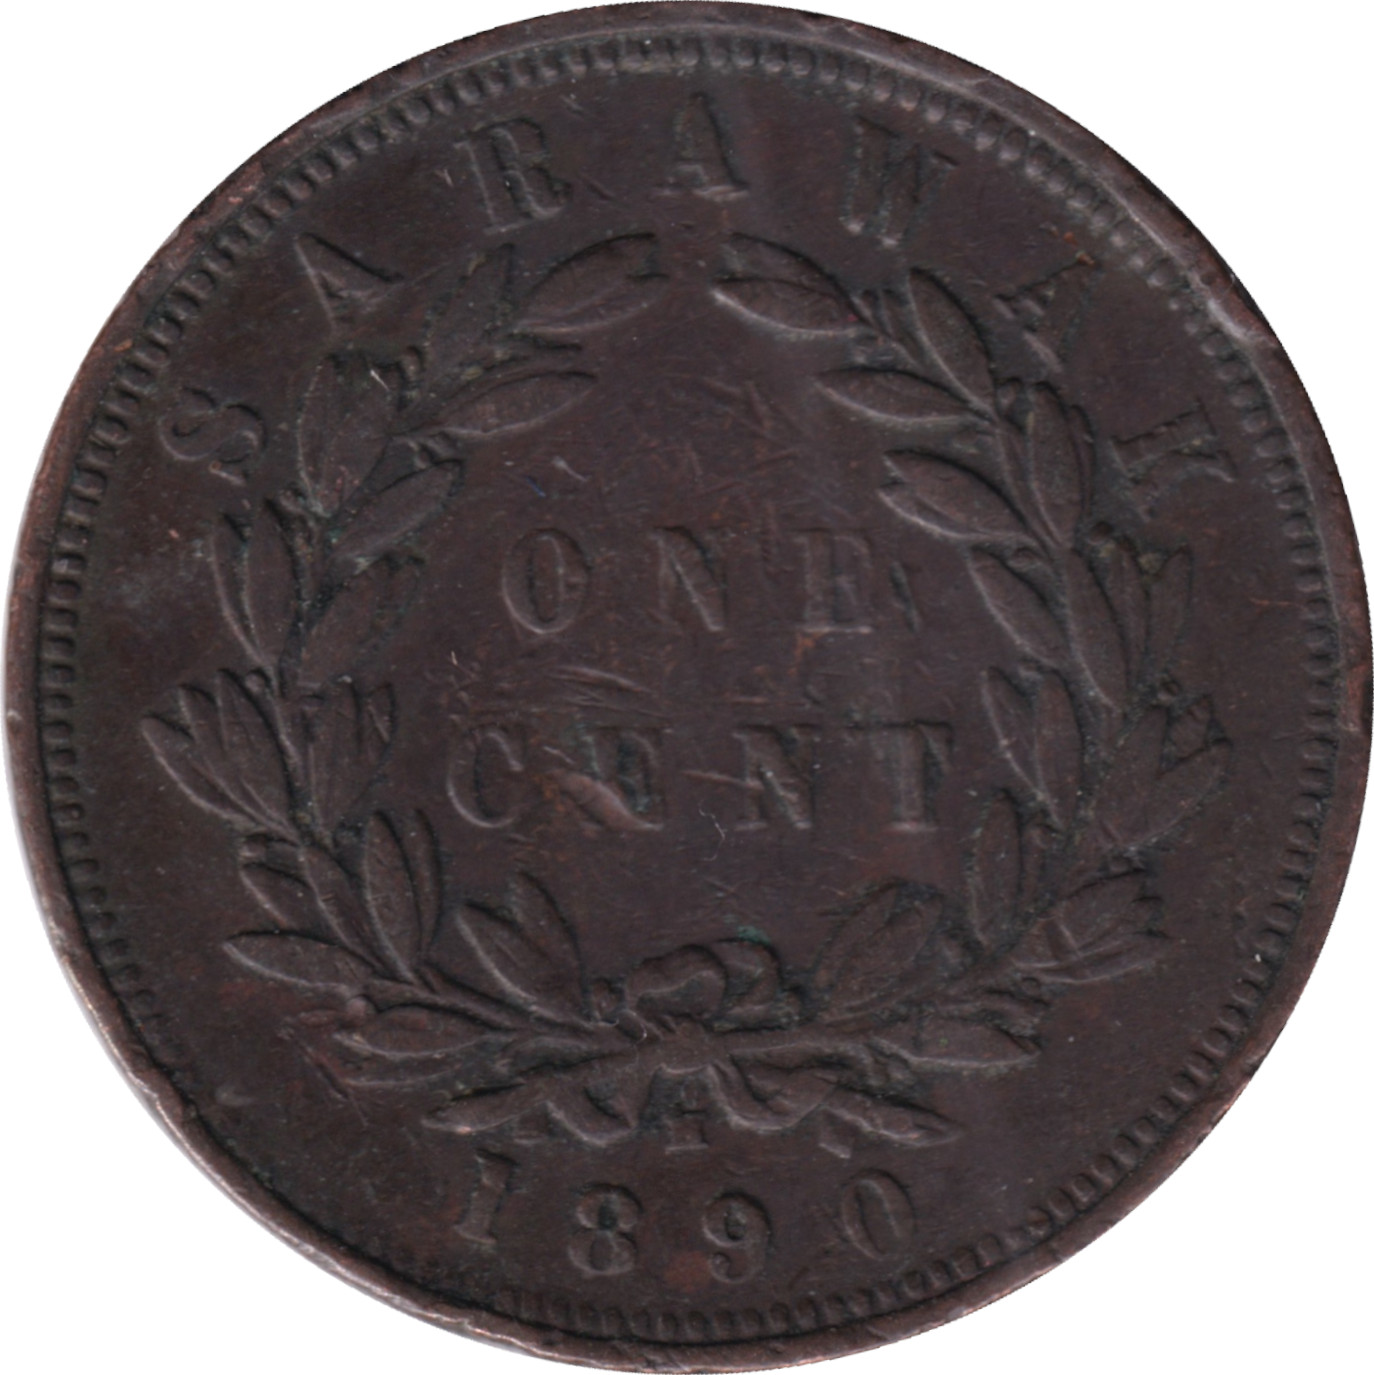 1 cent - Charles J. Brooke - Type 1